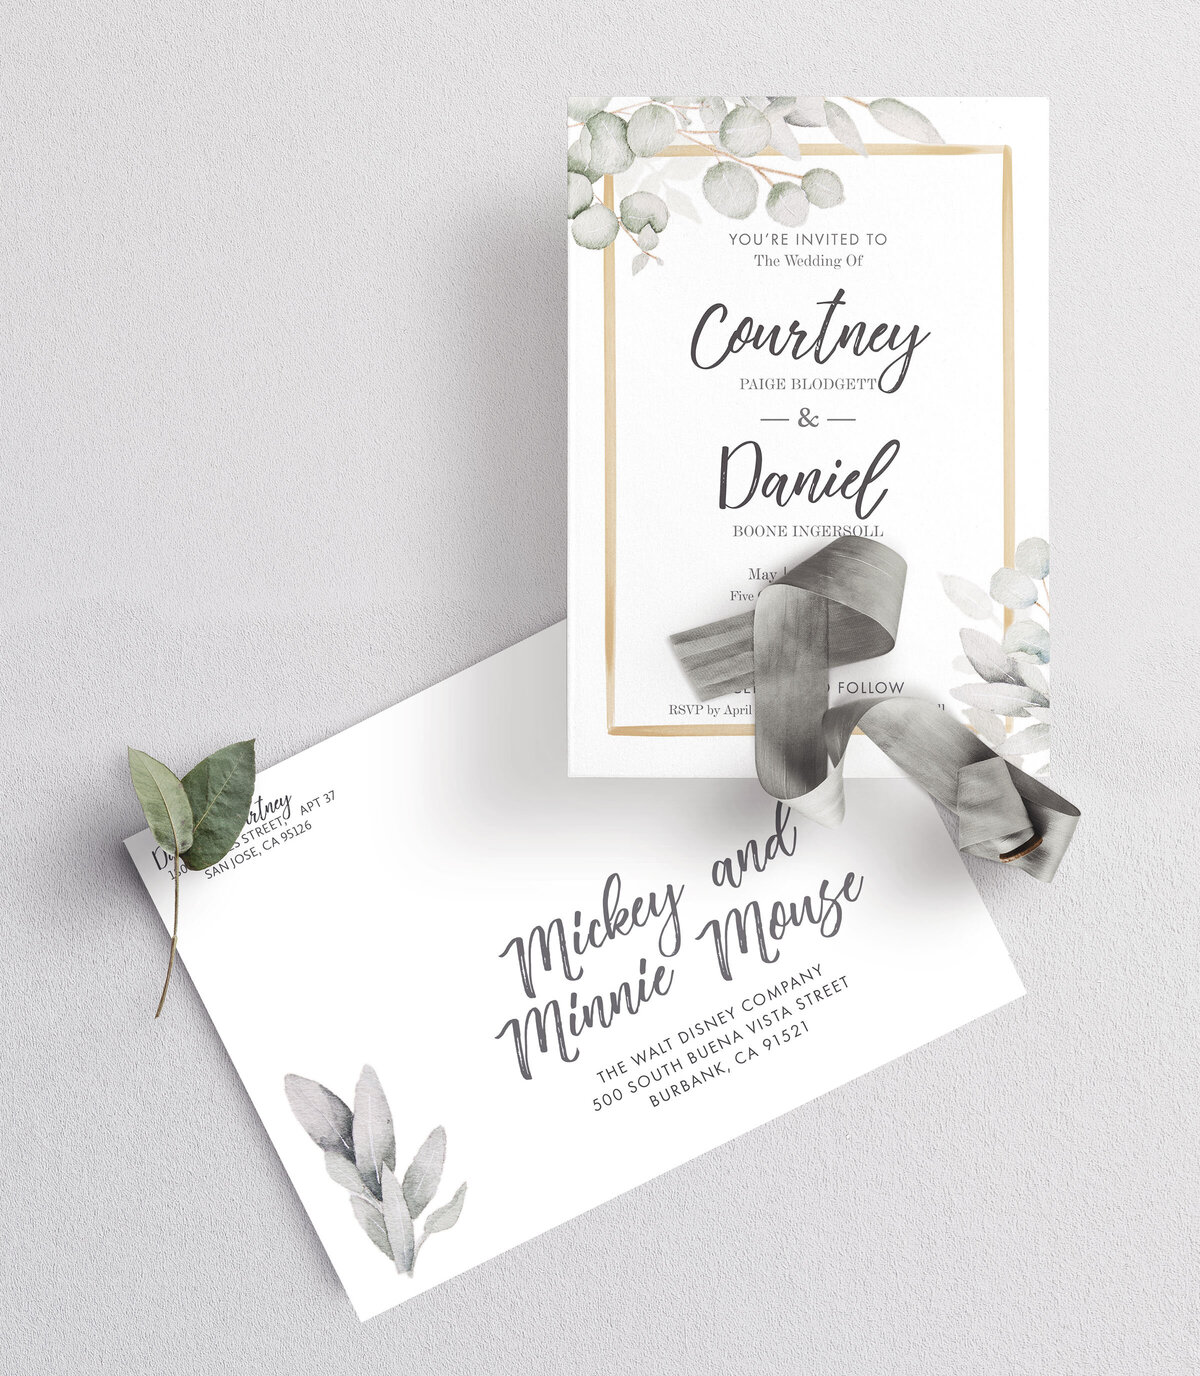 Wedding invitation design with sage, herbs and eucalyptus